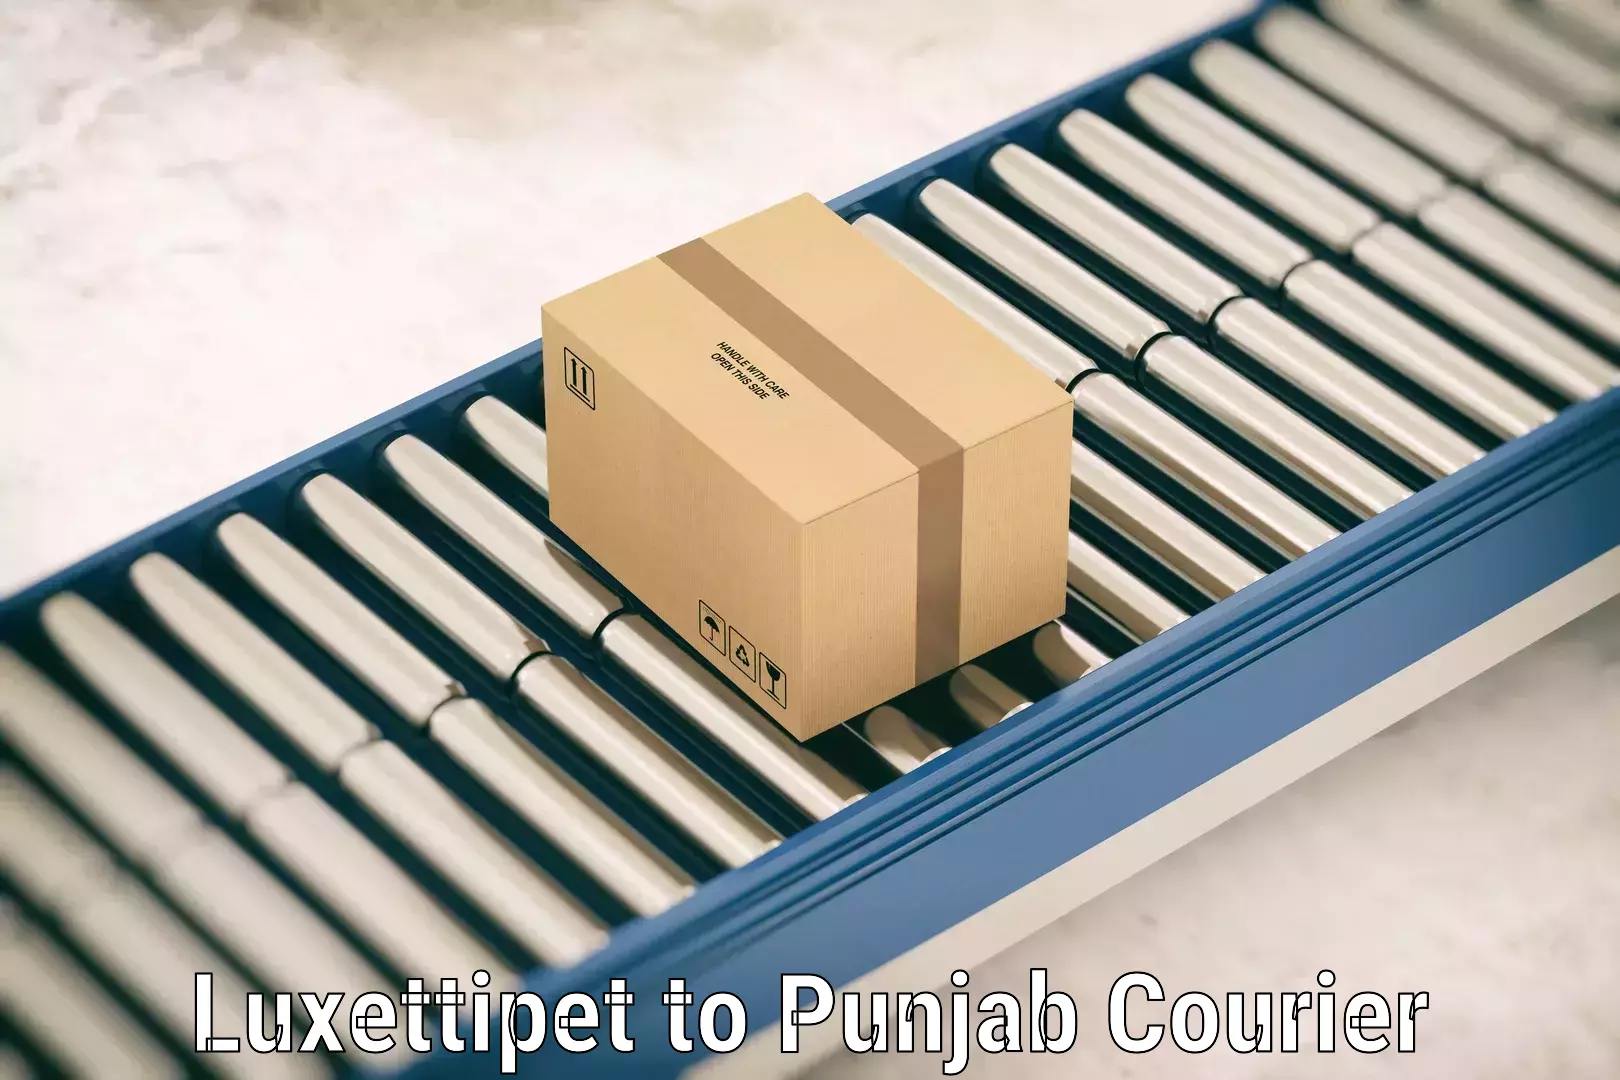 Doorstep luggage pickup Luxettipet to Punjab